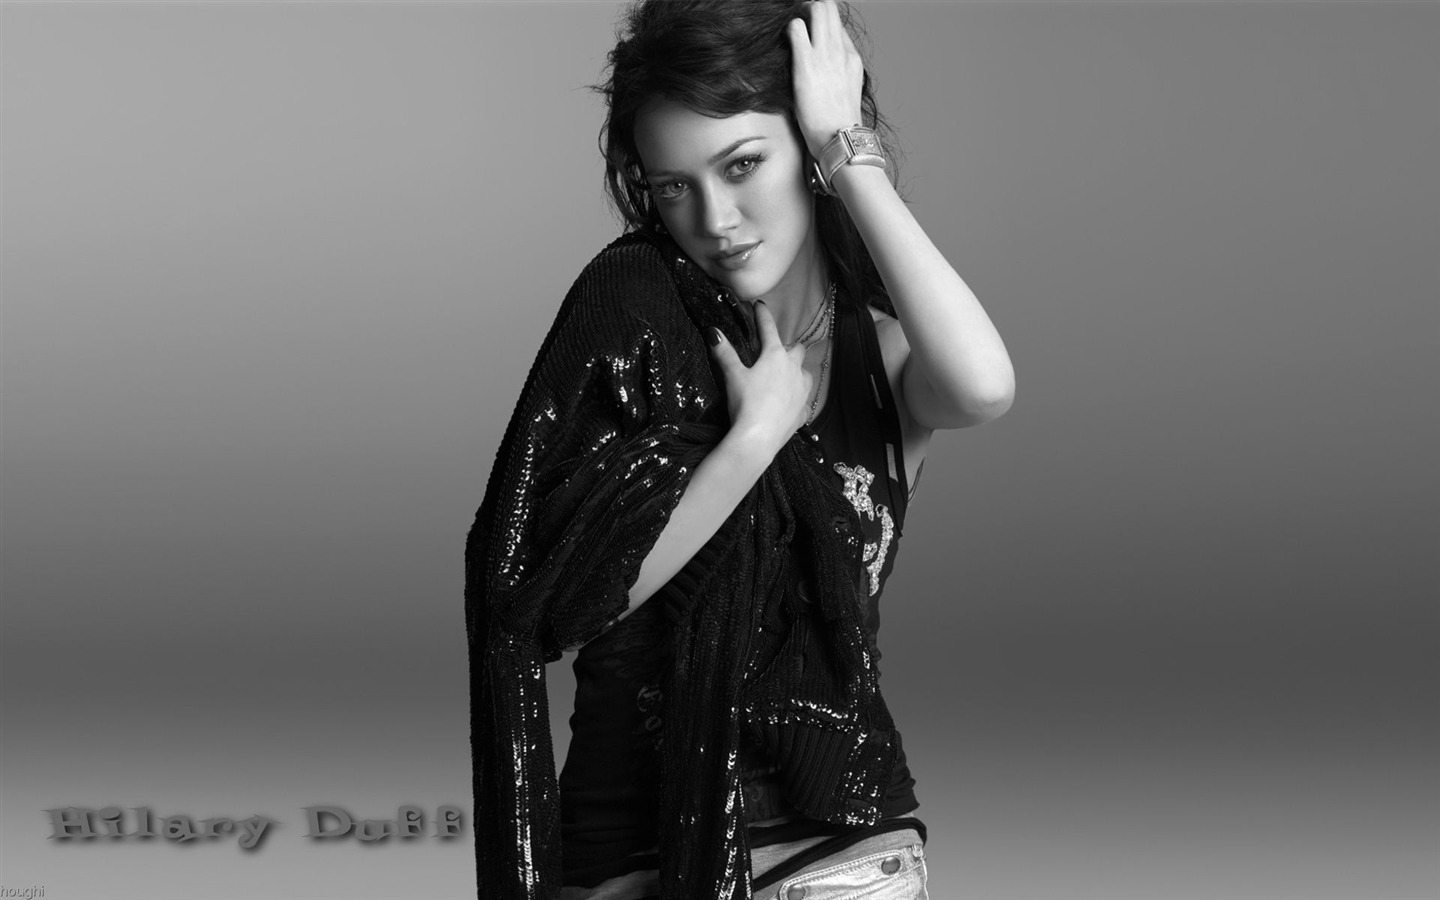 Hilary Duff 아름다운 벽지 #32 - 1440x900